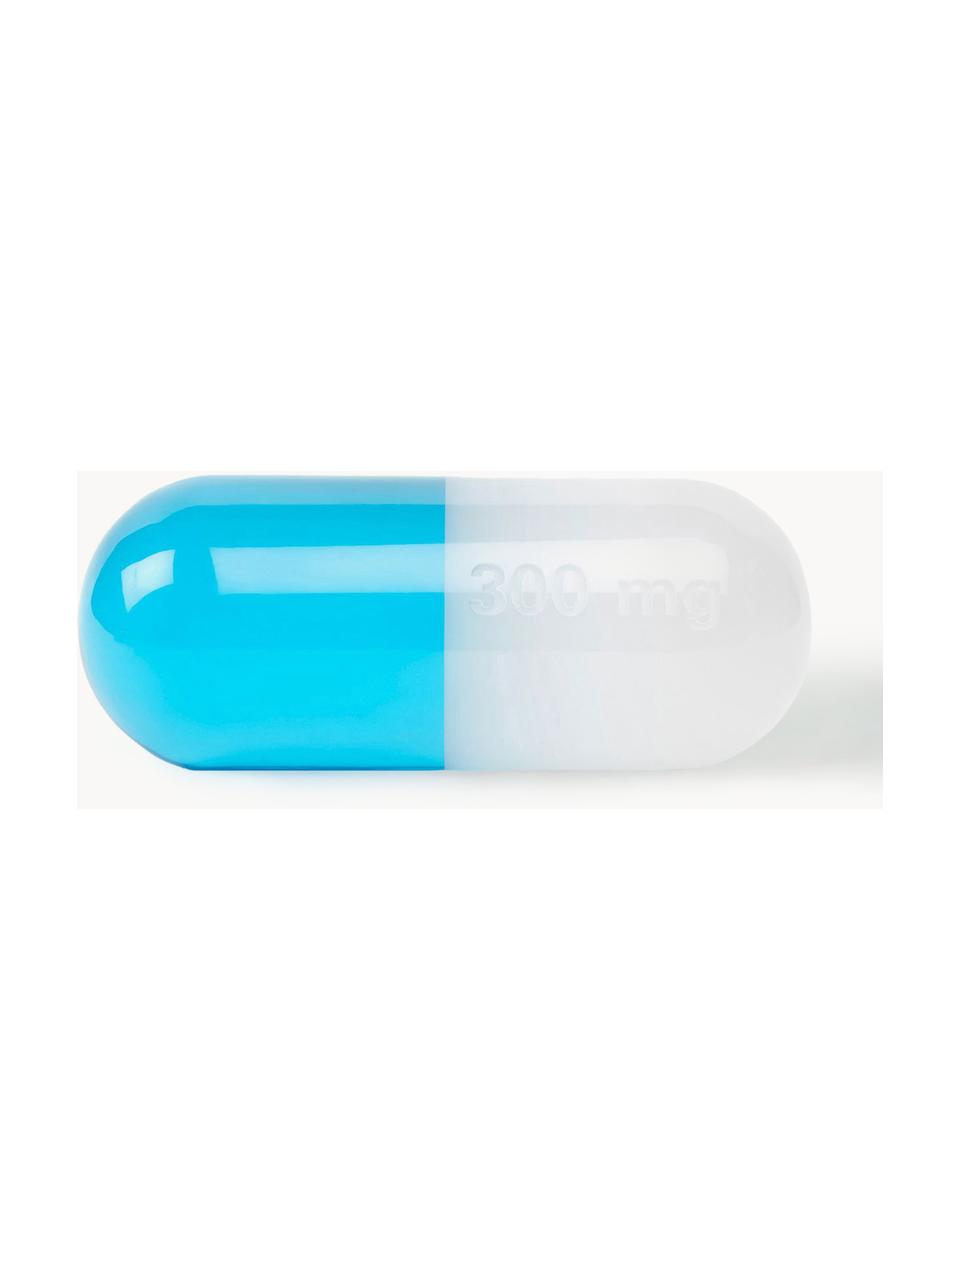 Deko-Objekt Pill, Polyacryl, poliert, Weiß, Türkis, B 24 x H 9 cm